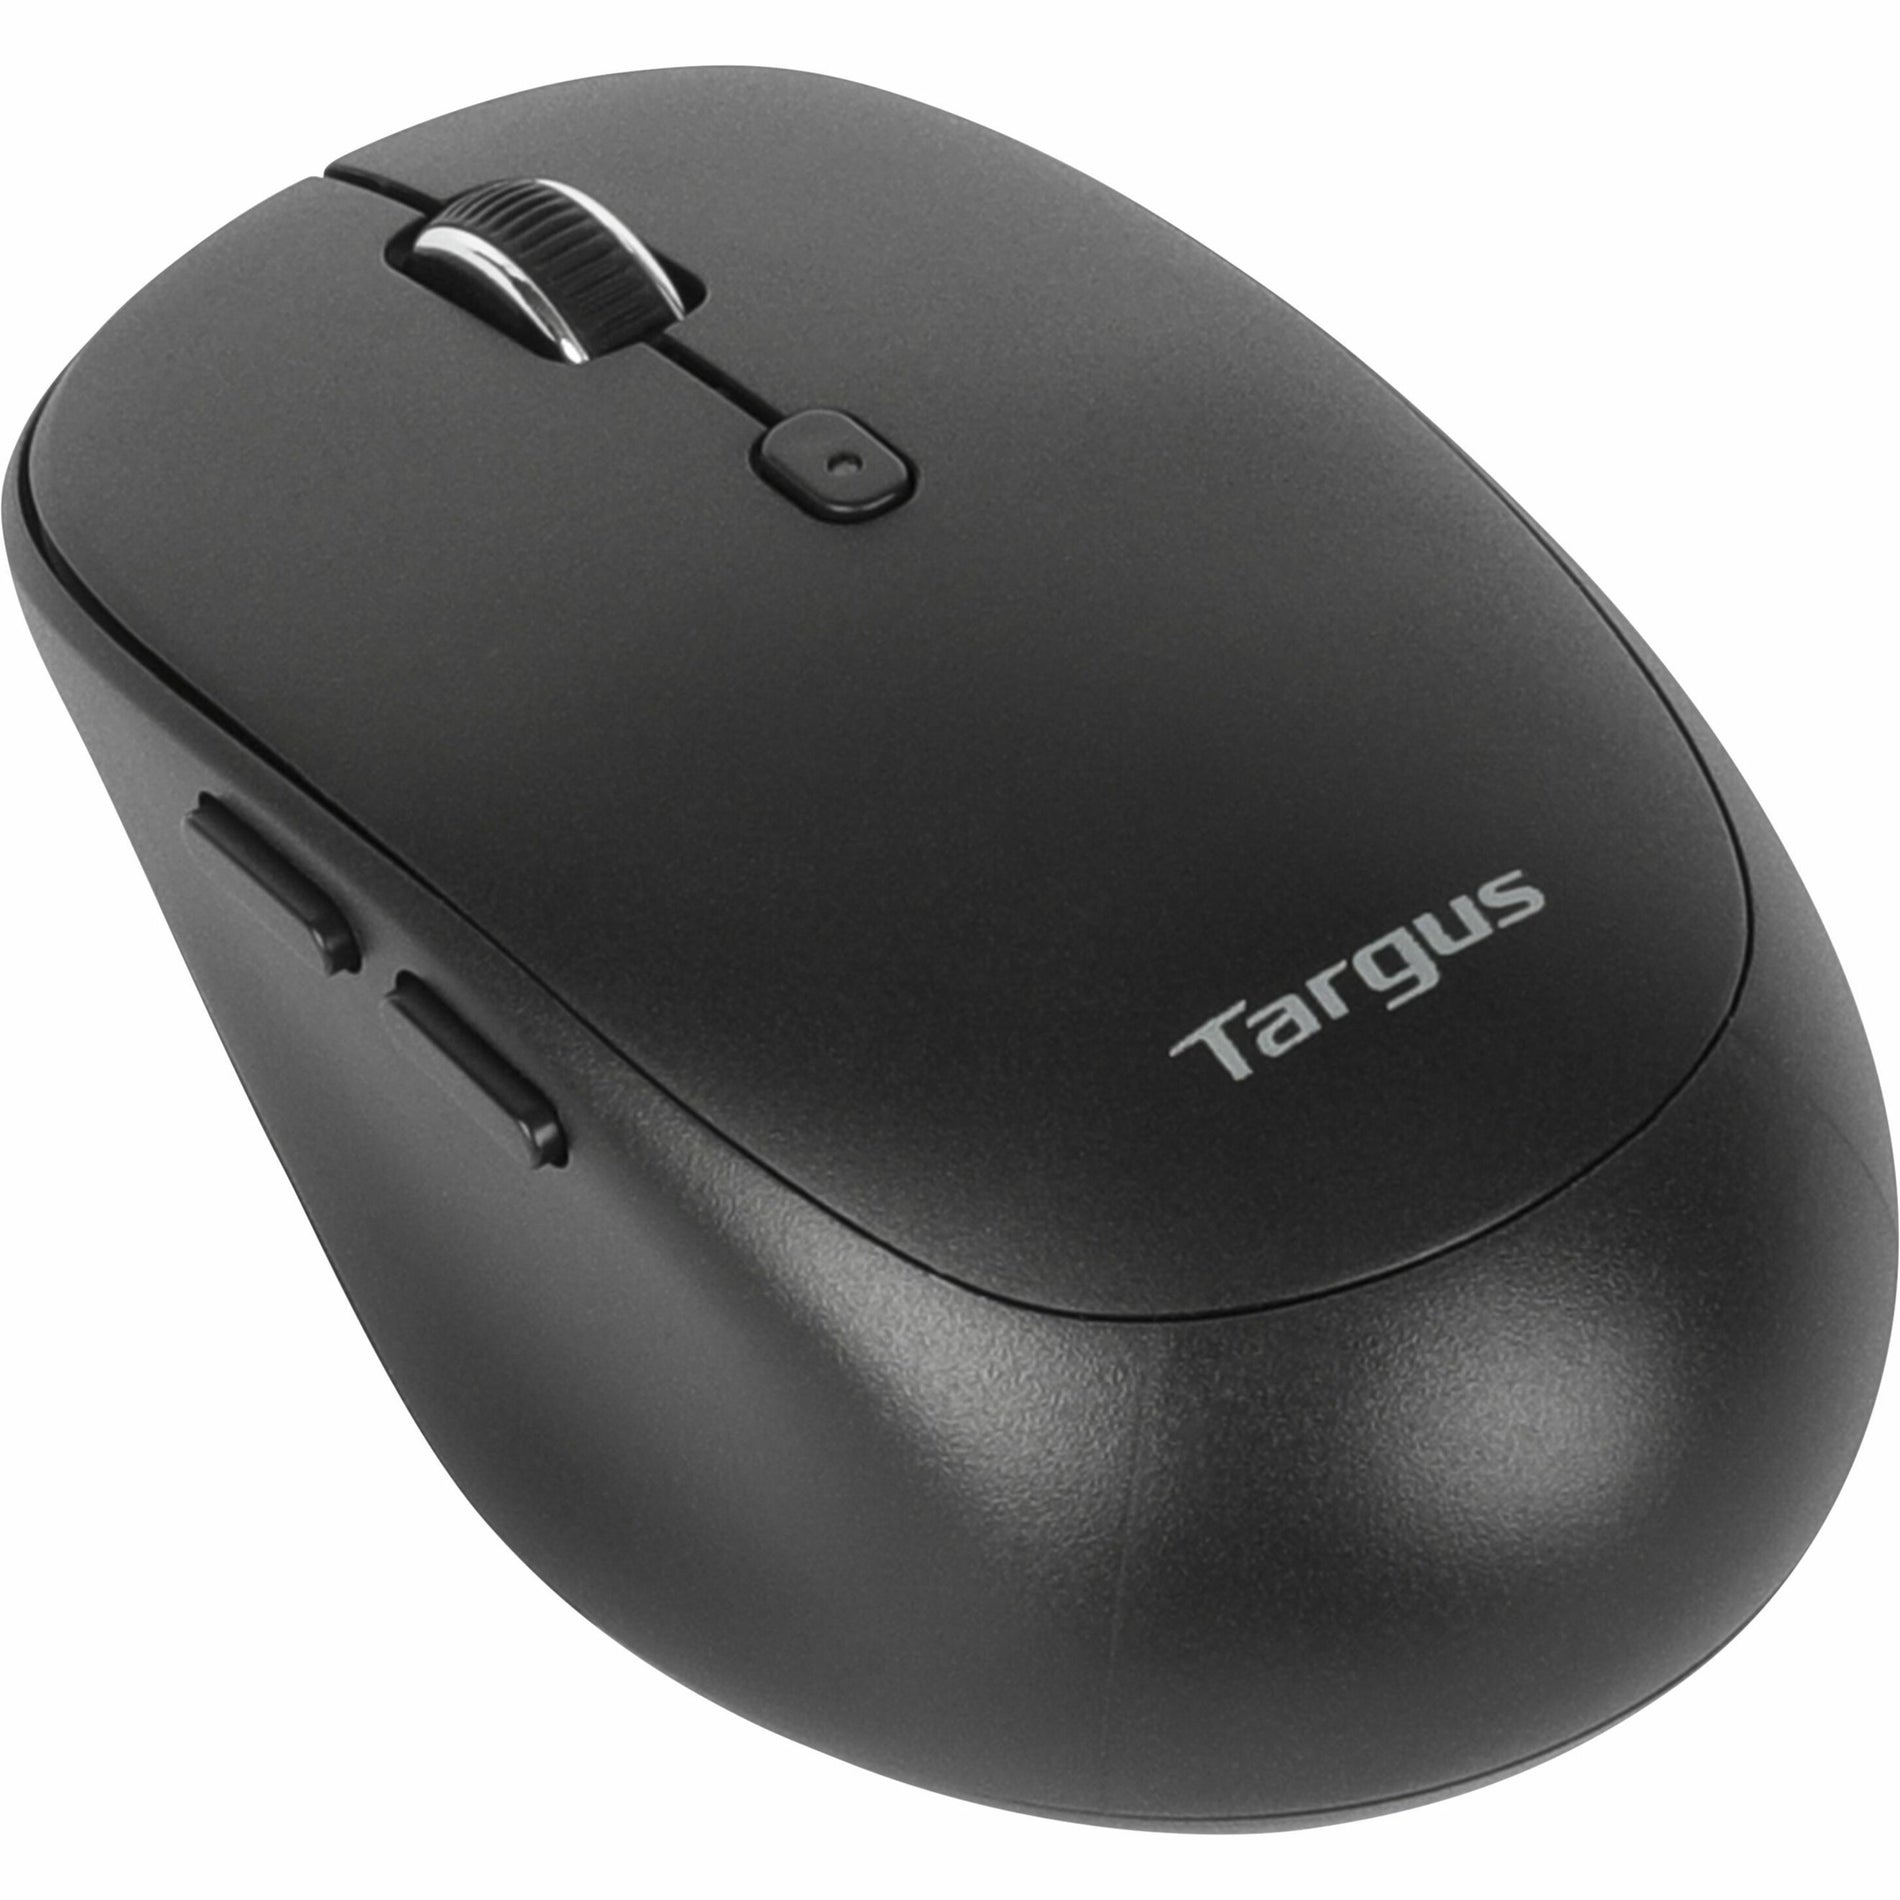 Targus AMB582GL Midsize Comfort Multi-Device Wireless Mouse w/Antimicrobial DefenseGuard (Black), Ergonomic Fit, 2400 dpi